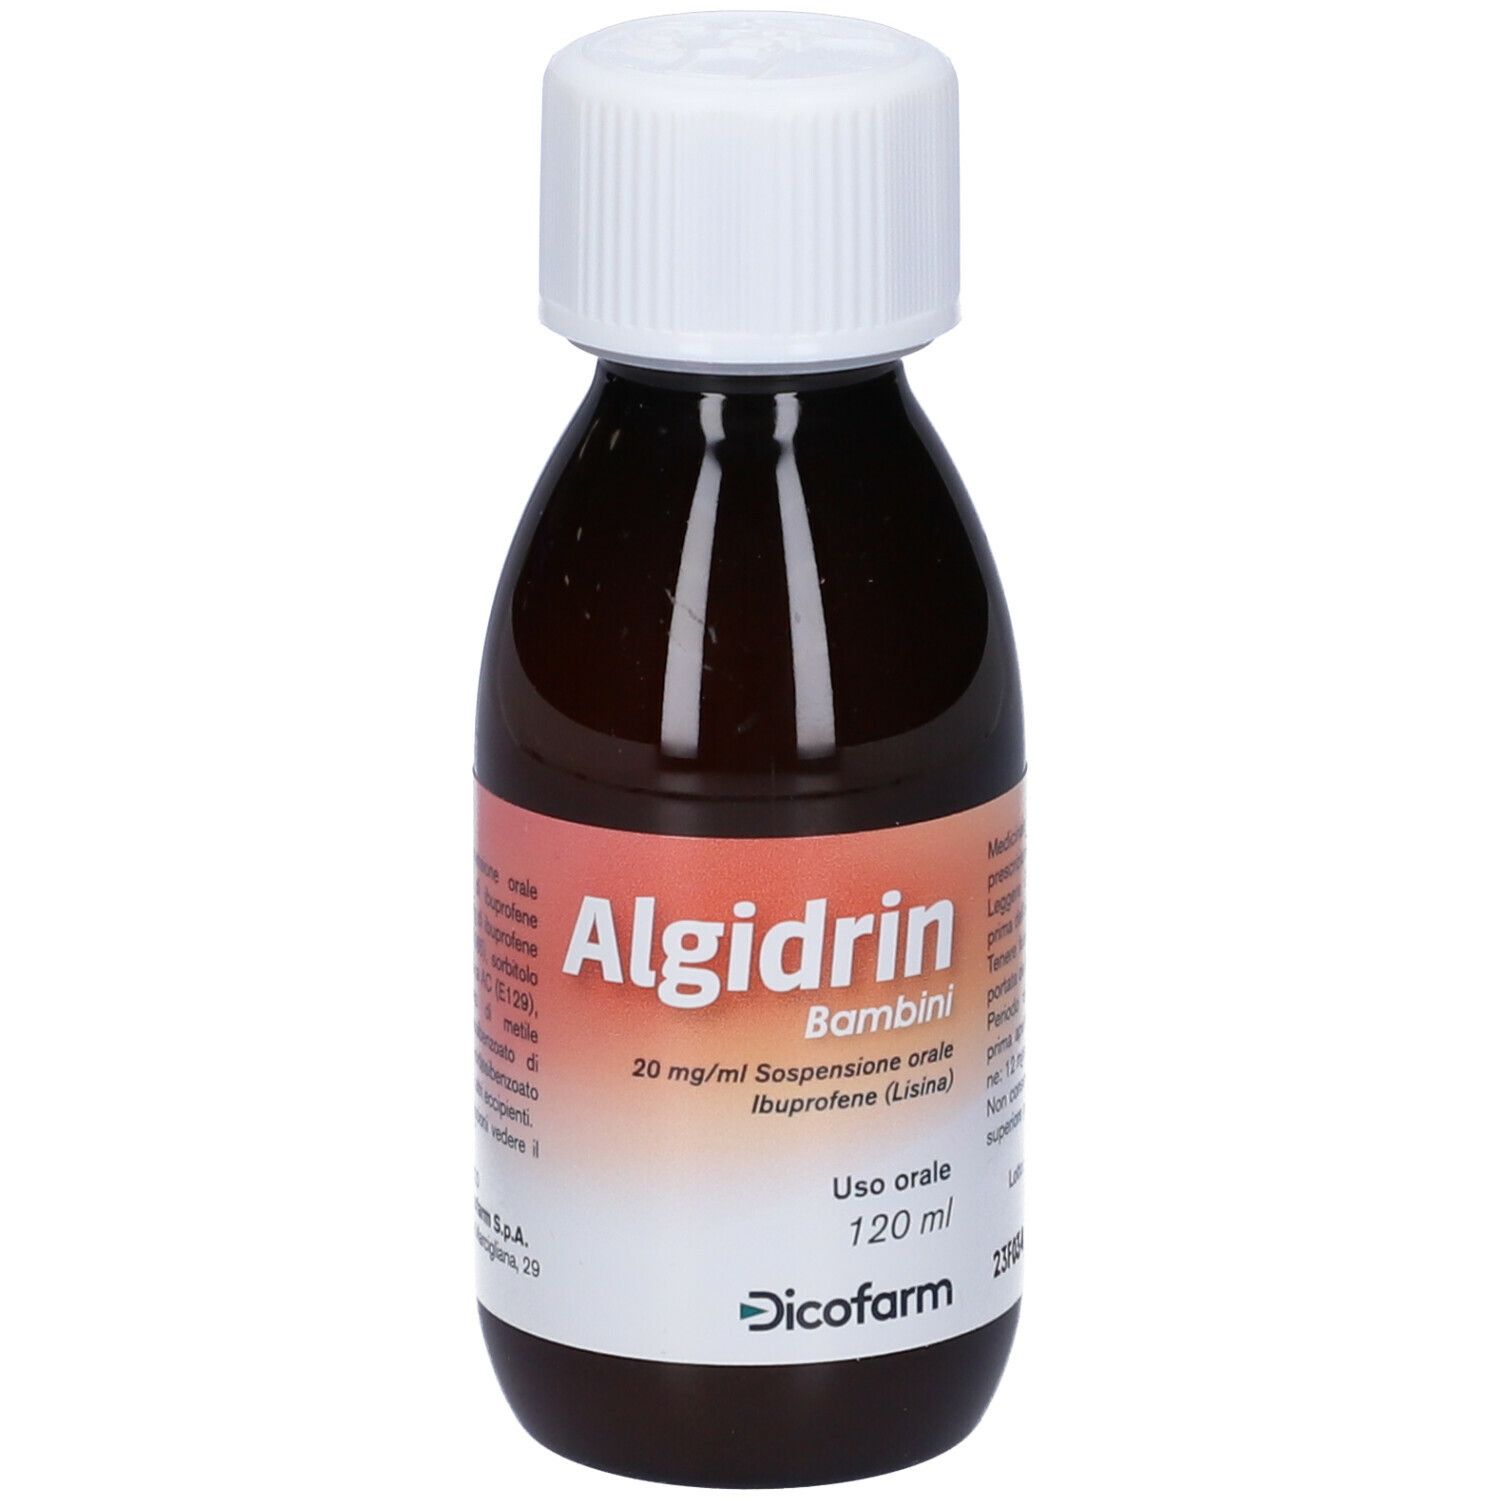 Image of Algidrin 20 mg/ml Sospensione orale, Bambini